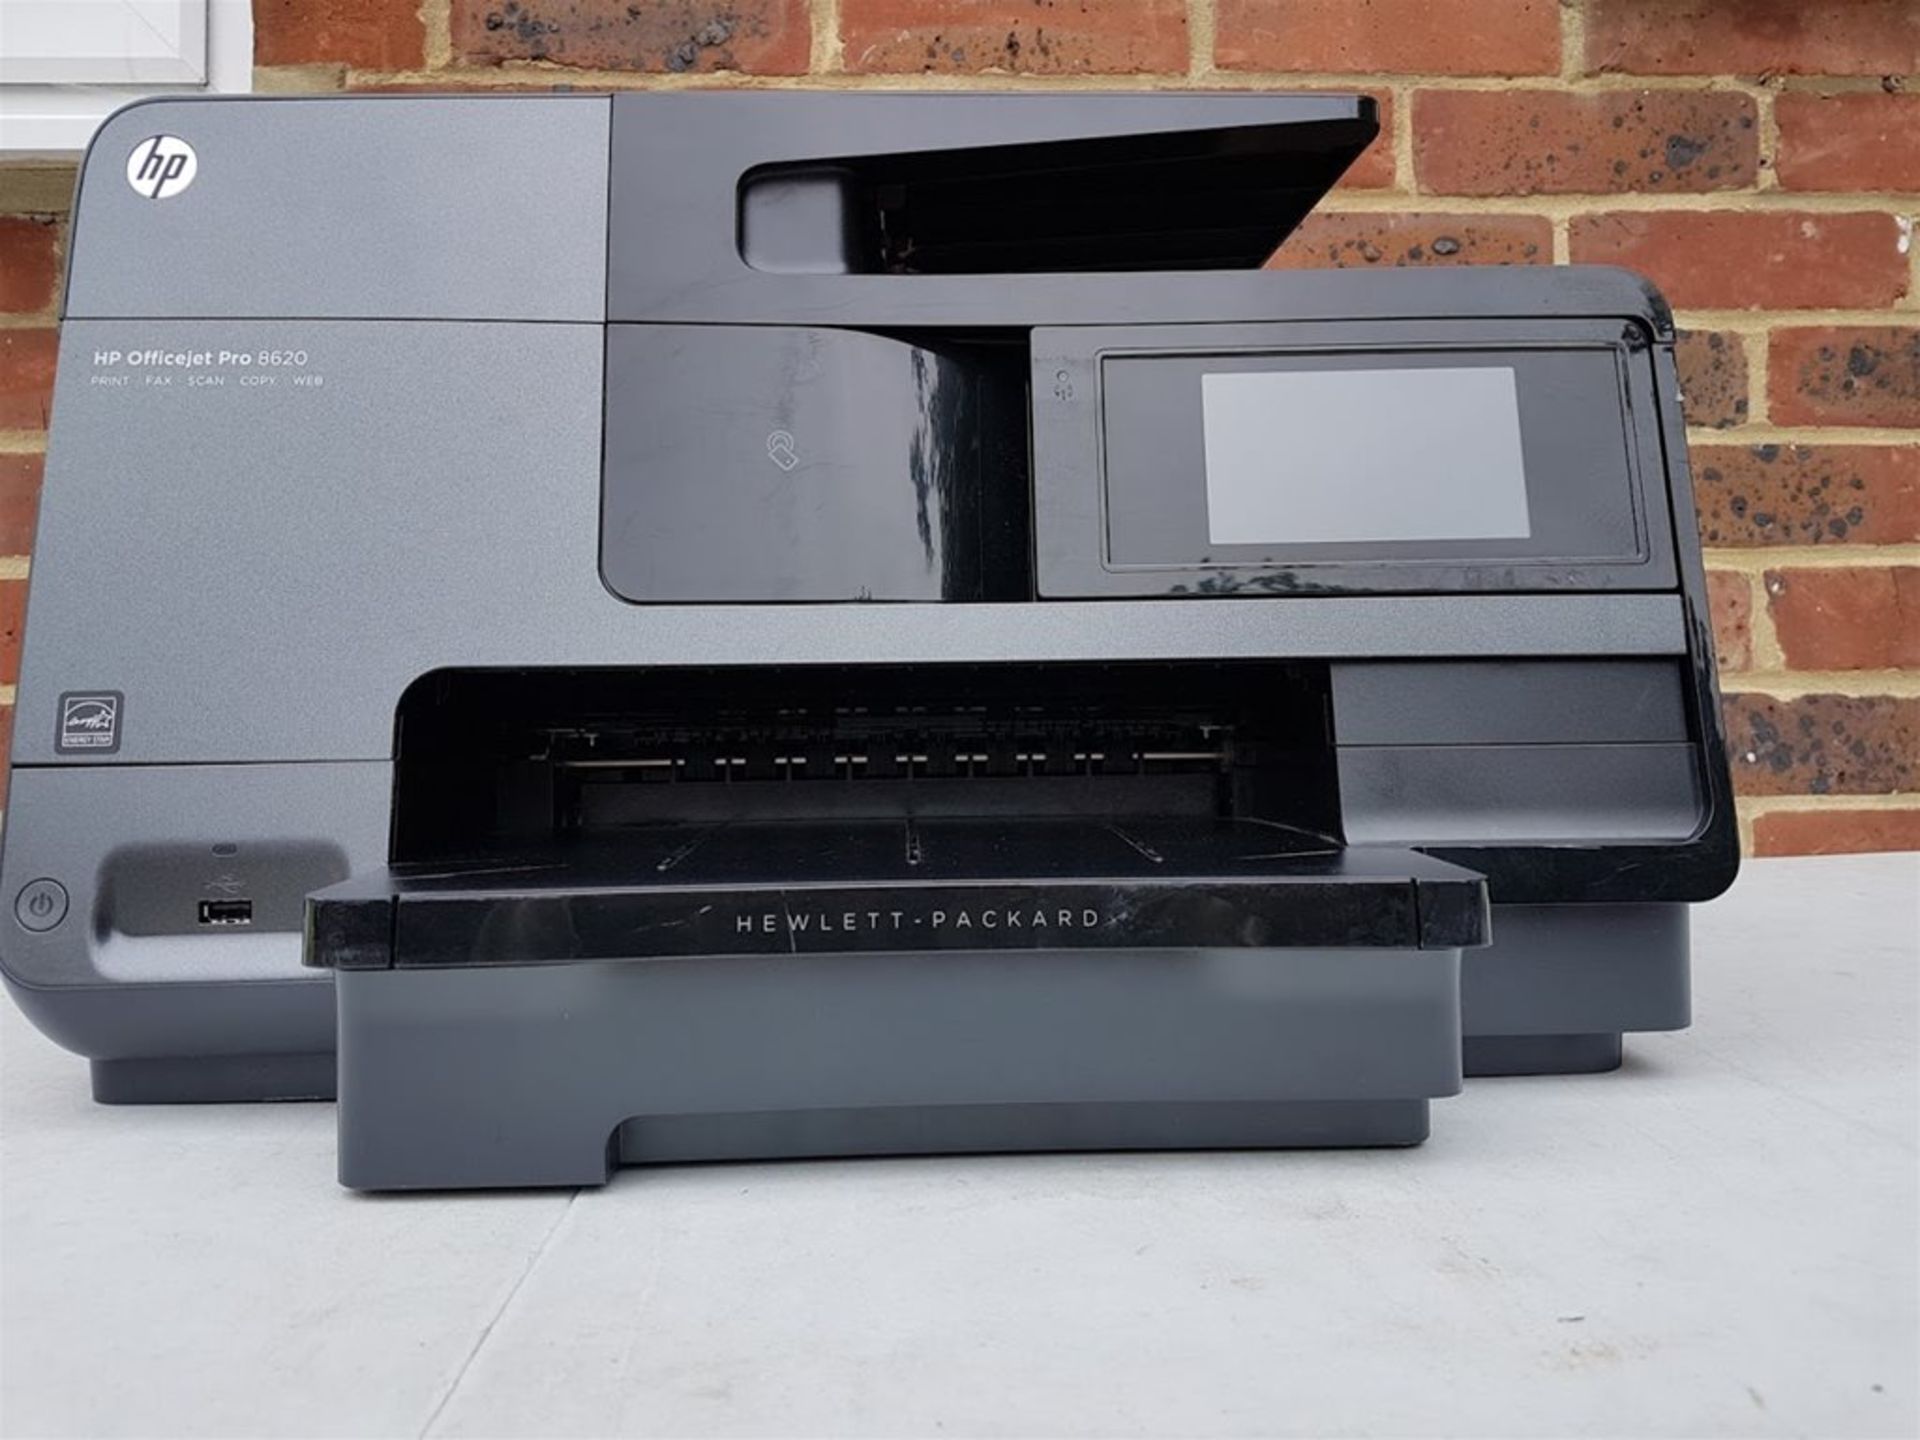 HP Officejet Pro 8620 All-in-One A4 Printer. Customer Return